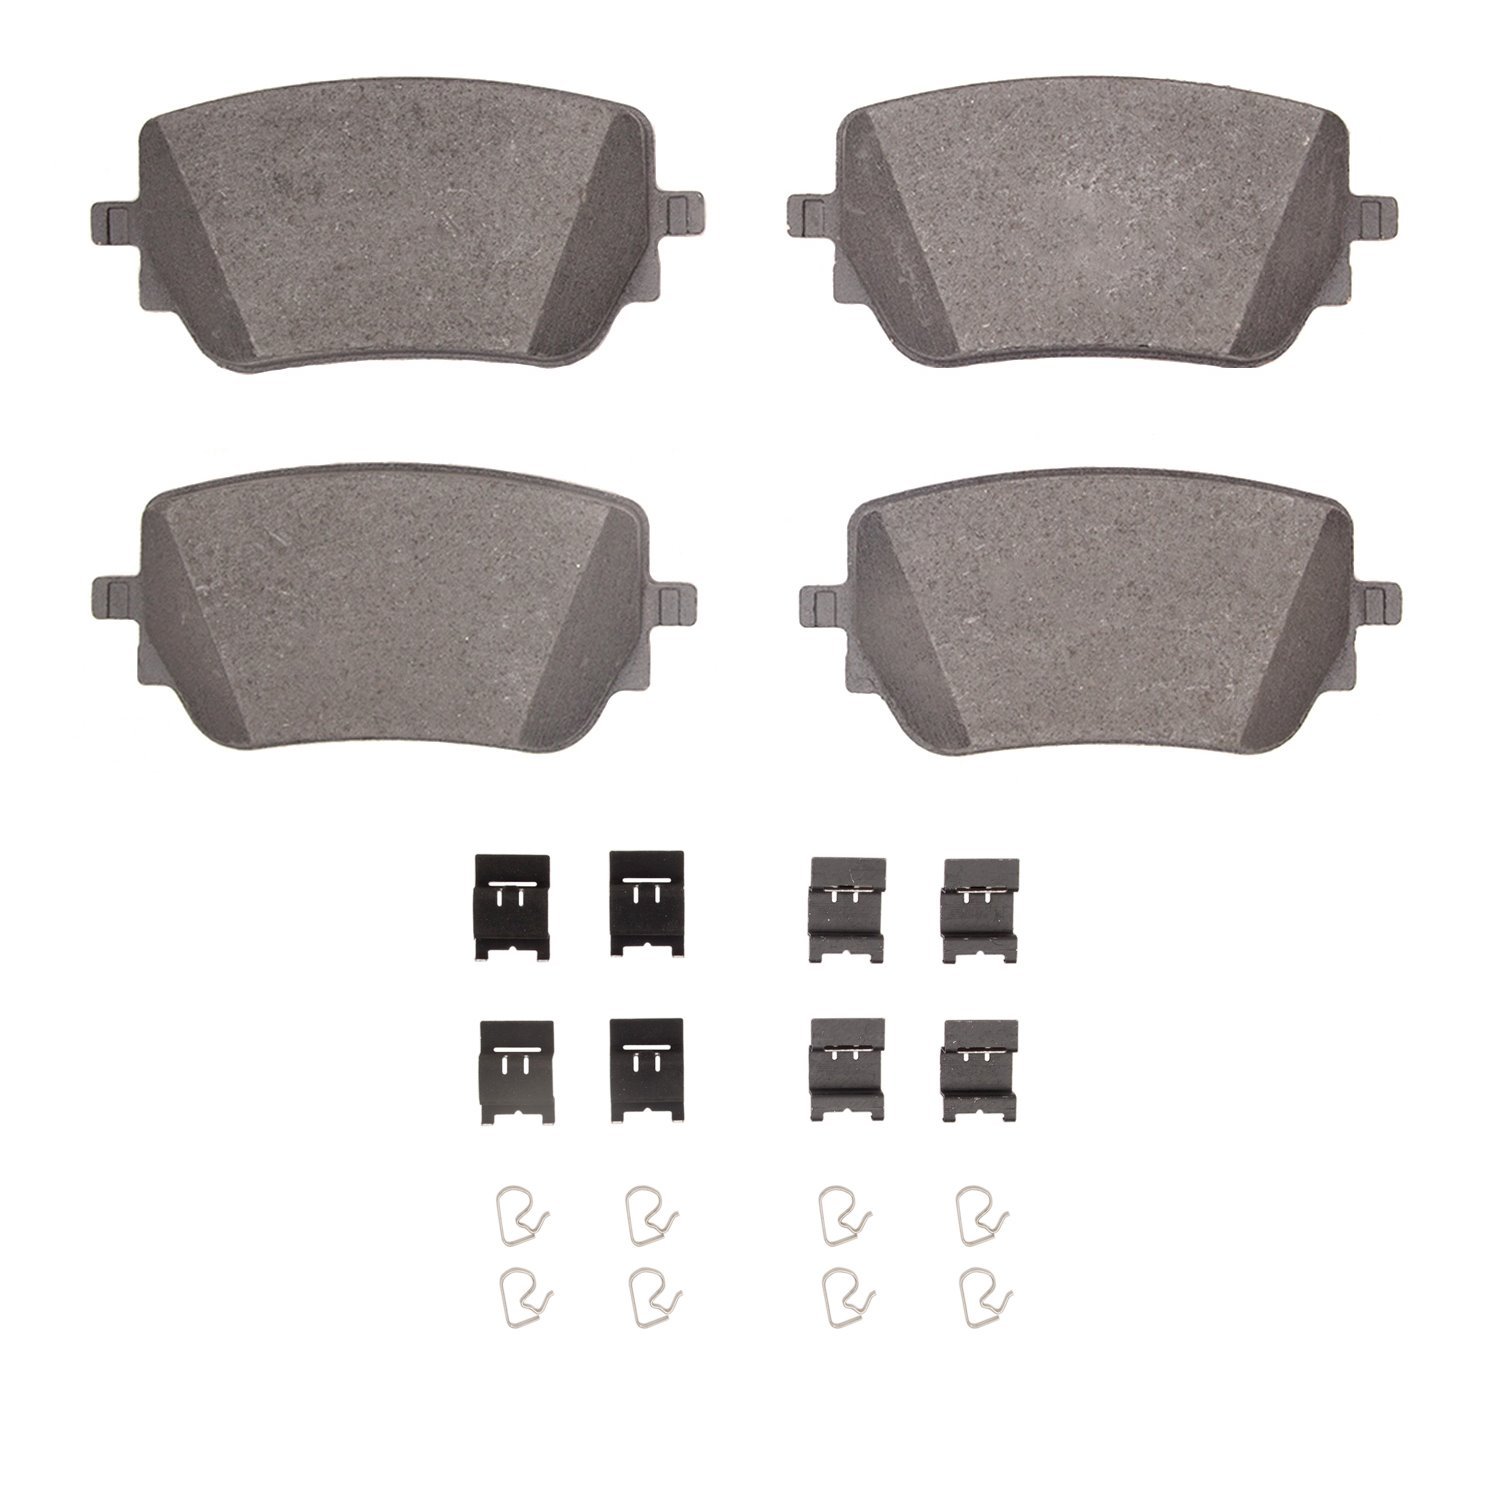 1551-2271-01 5000 Advanced Ceramic Brake Pads & Hardware Kit, Fits Select Mercedes-Benz, Position: Rear